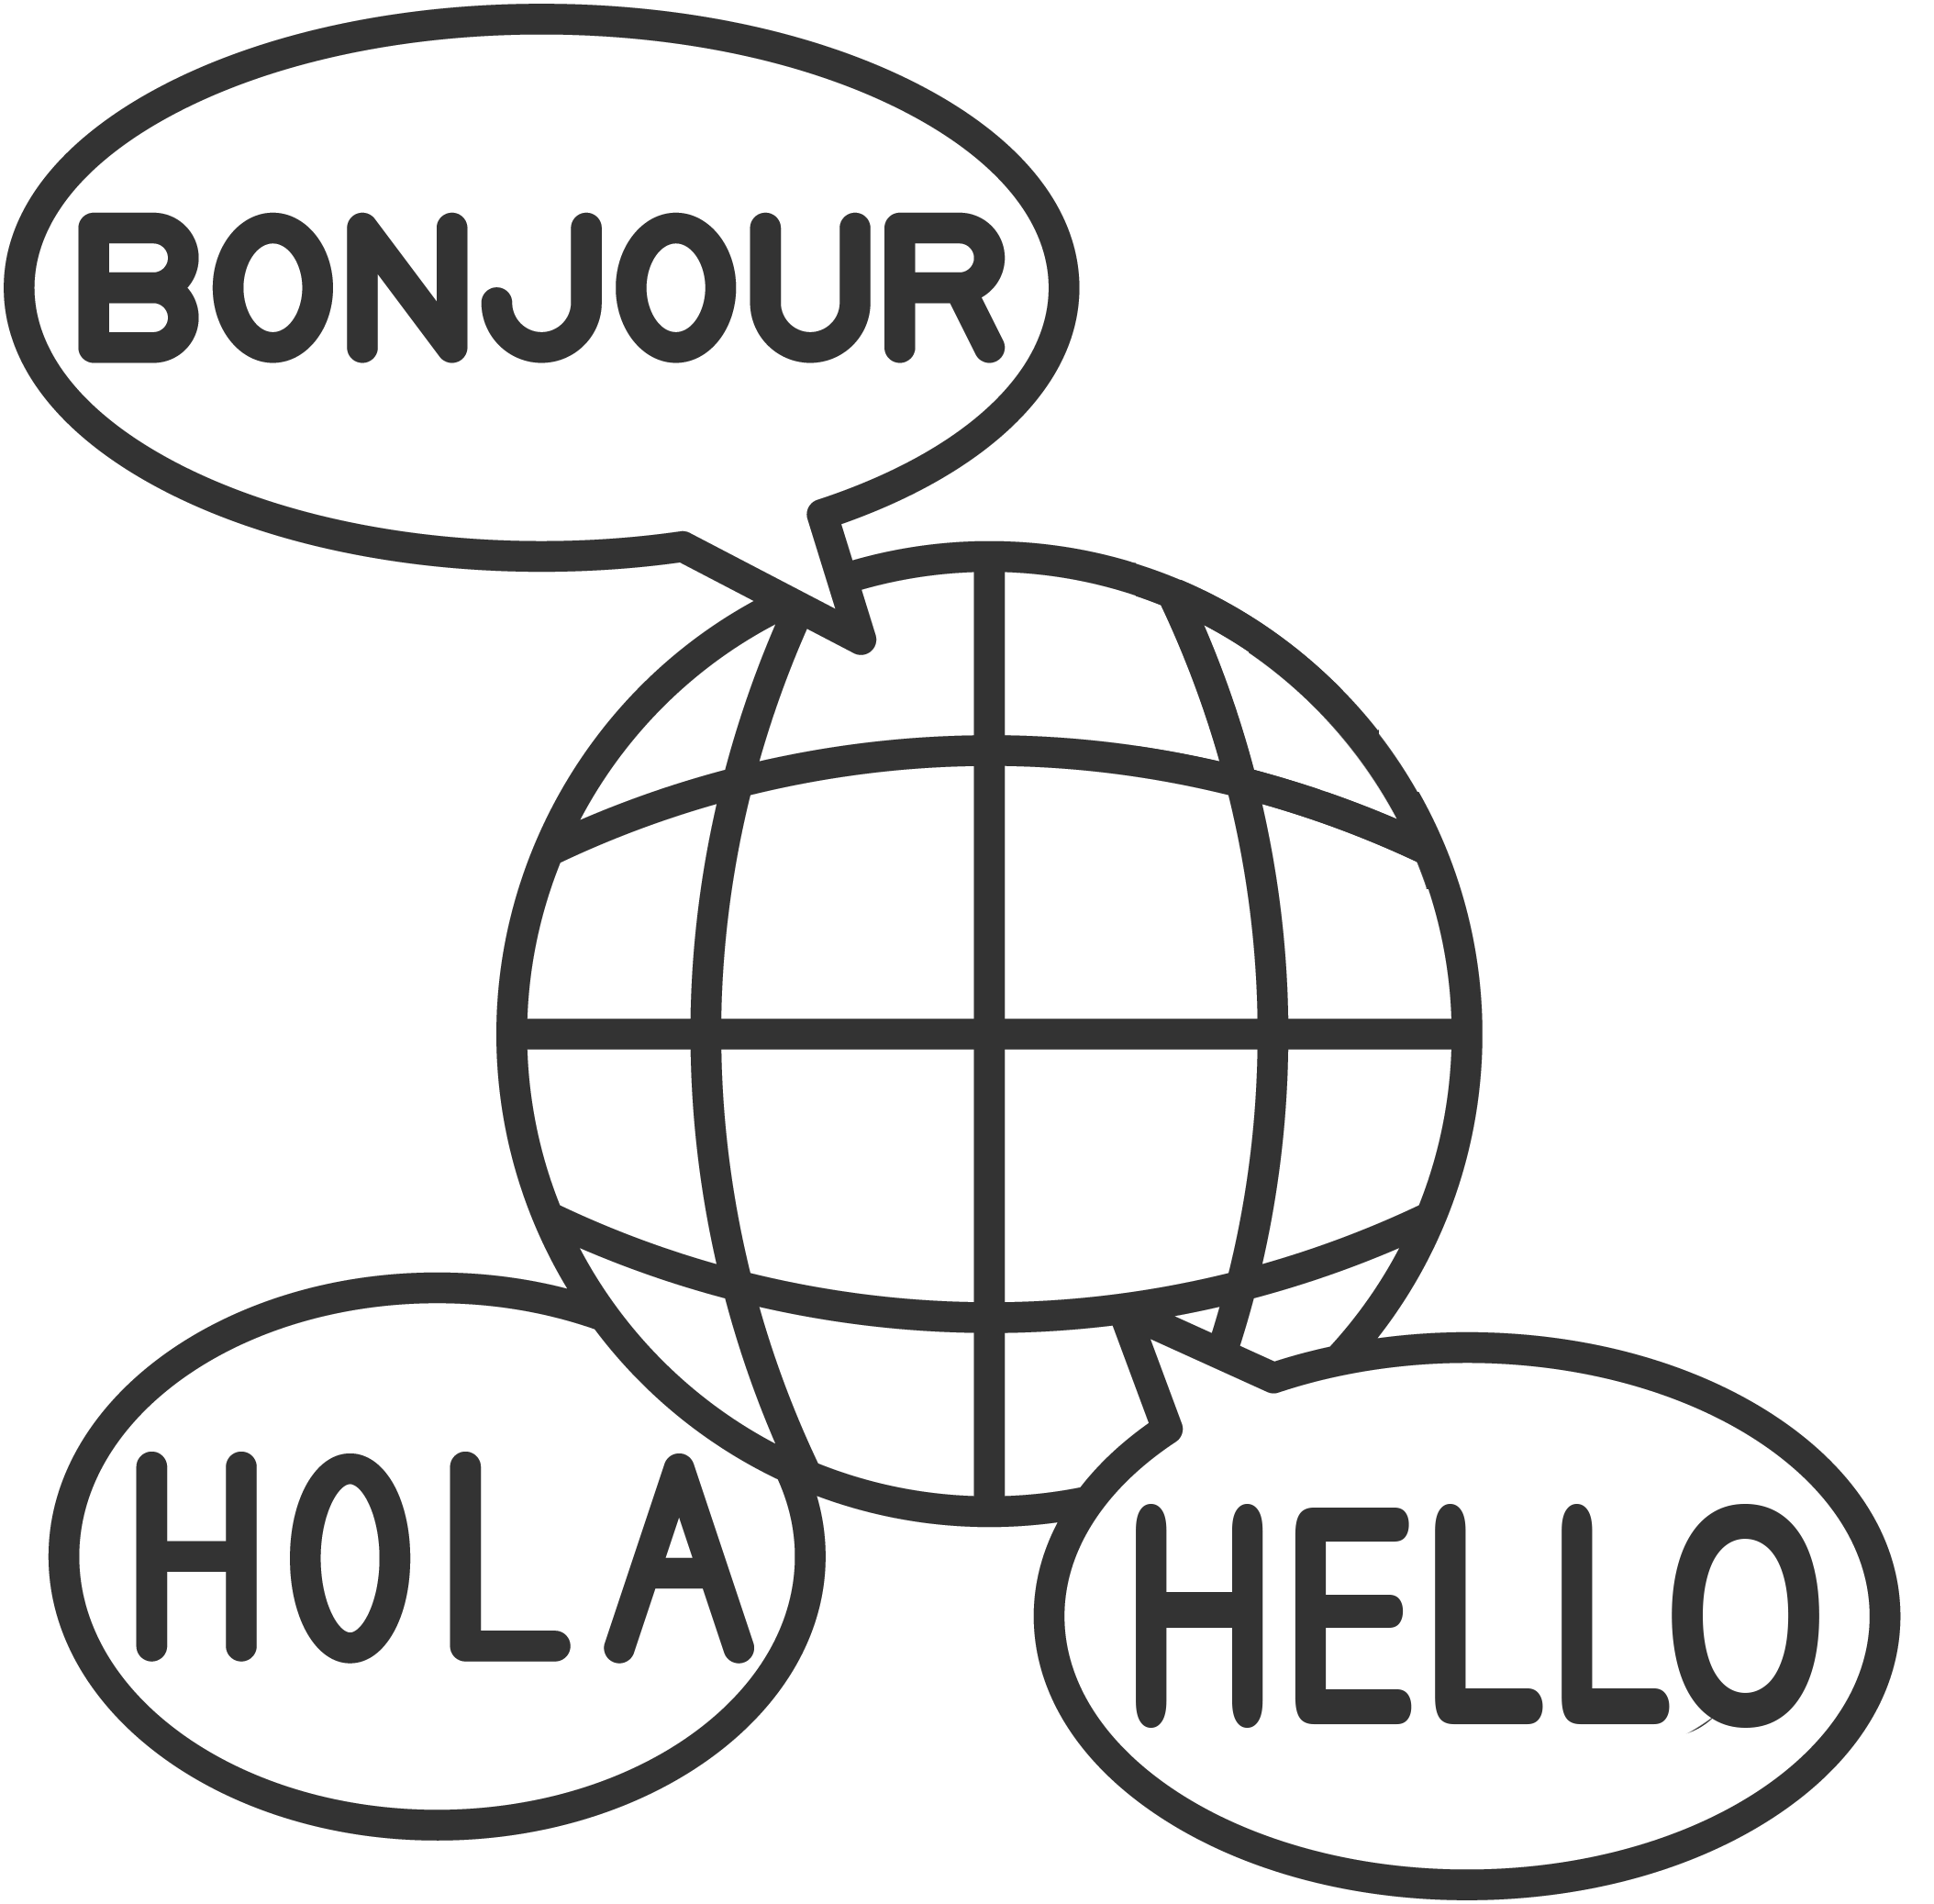 different languages being spoken around the globe.